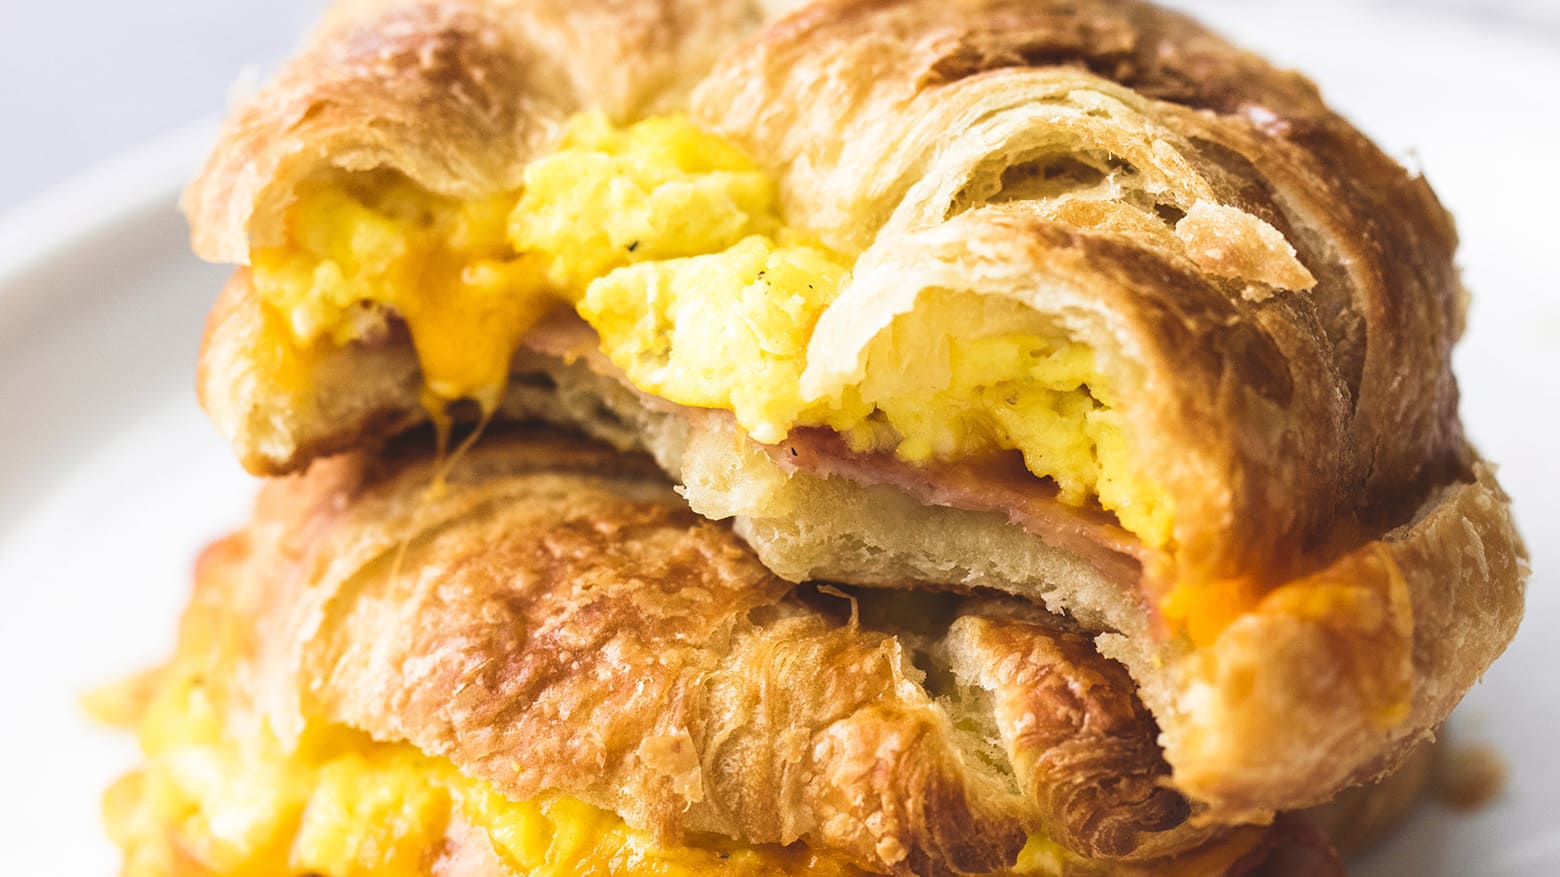 Croissant Breakfast Sandwiches - My Baking Addiction